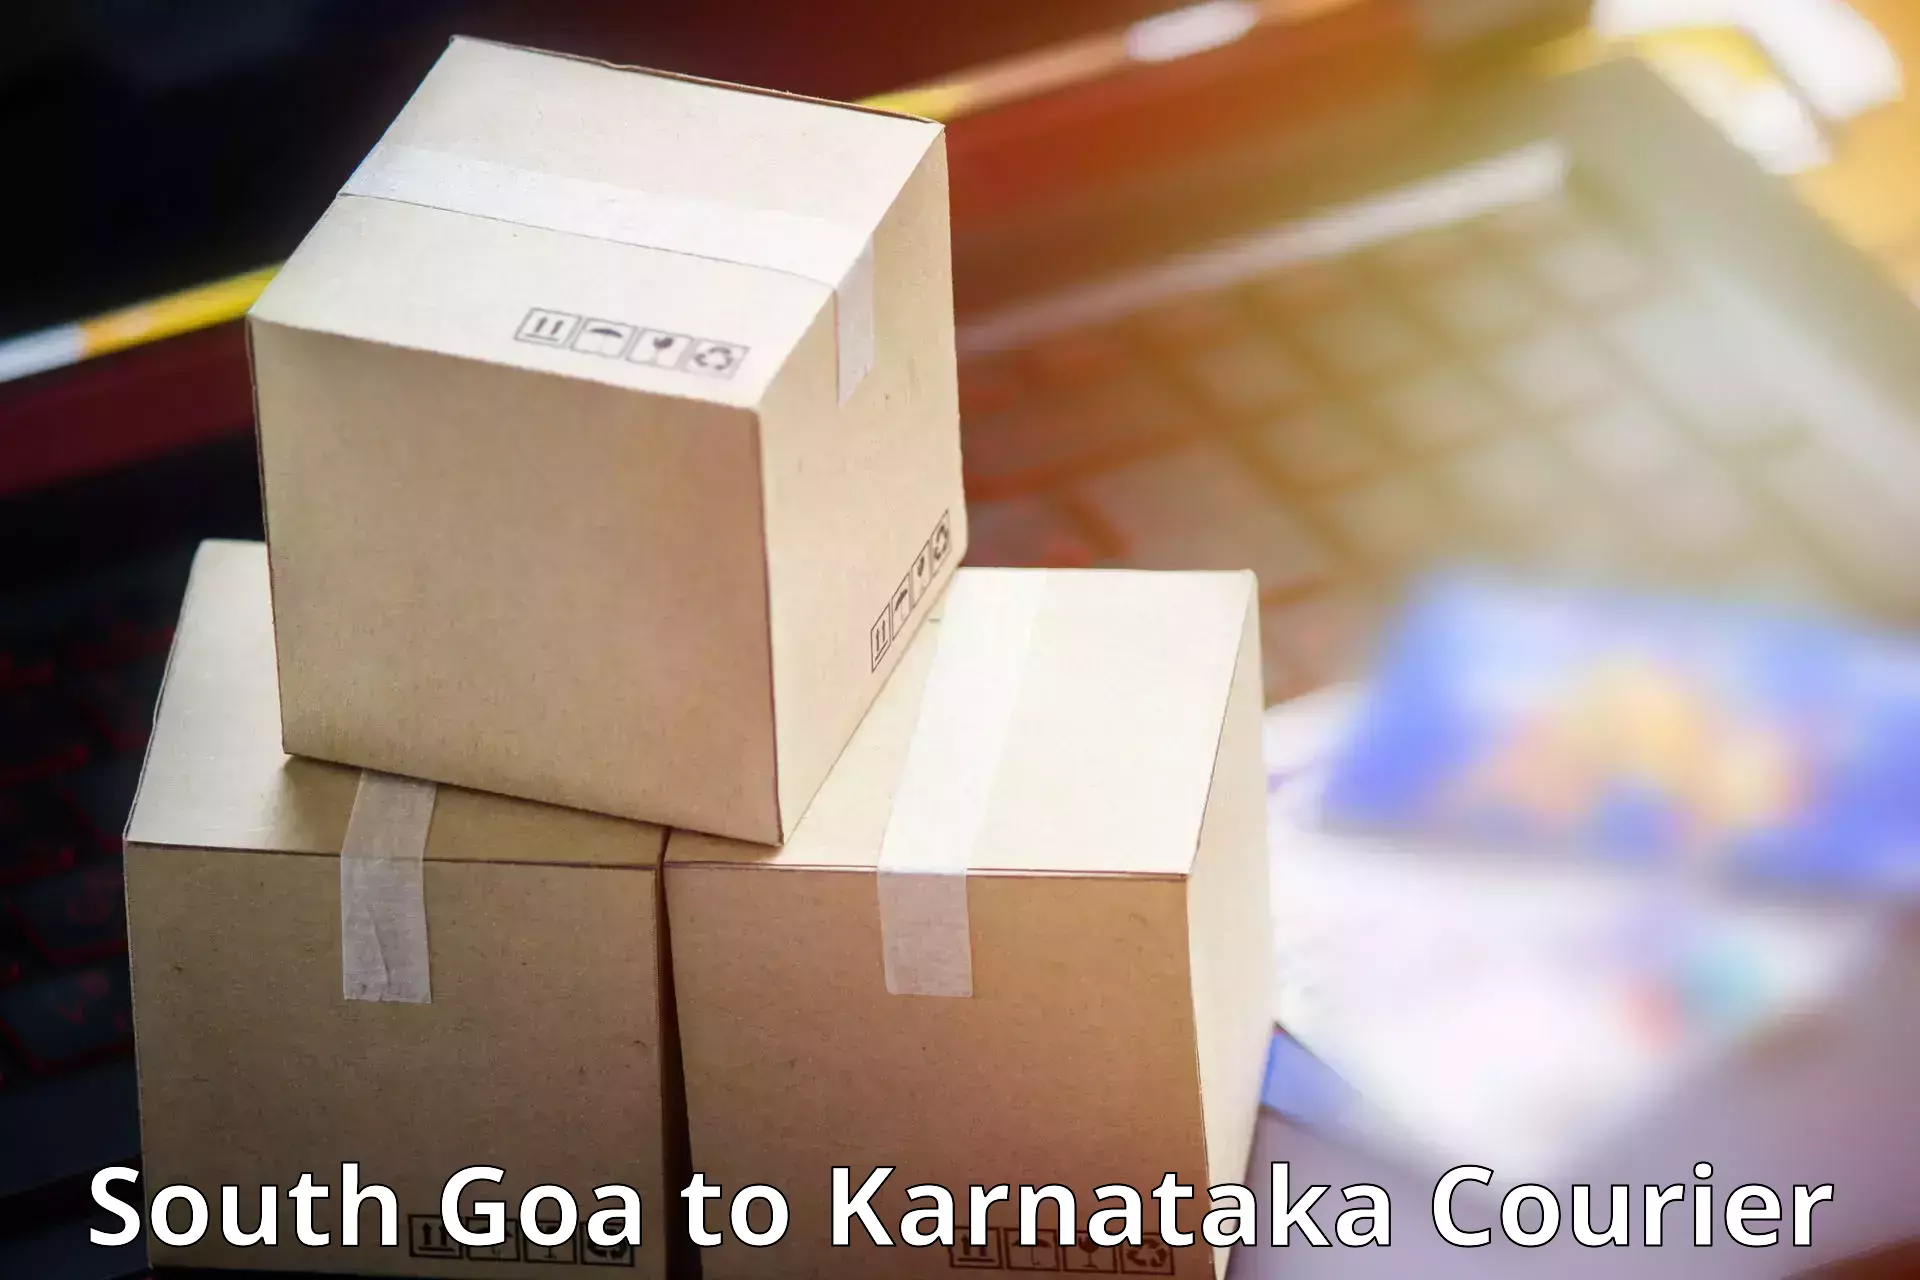 Courier service partnerships South Goa to Kalaburagi